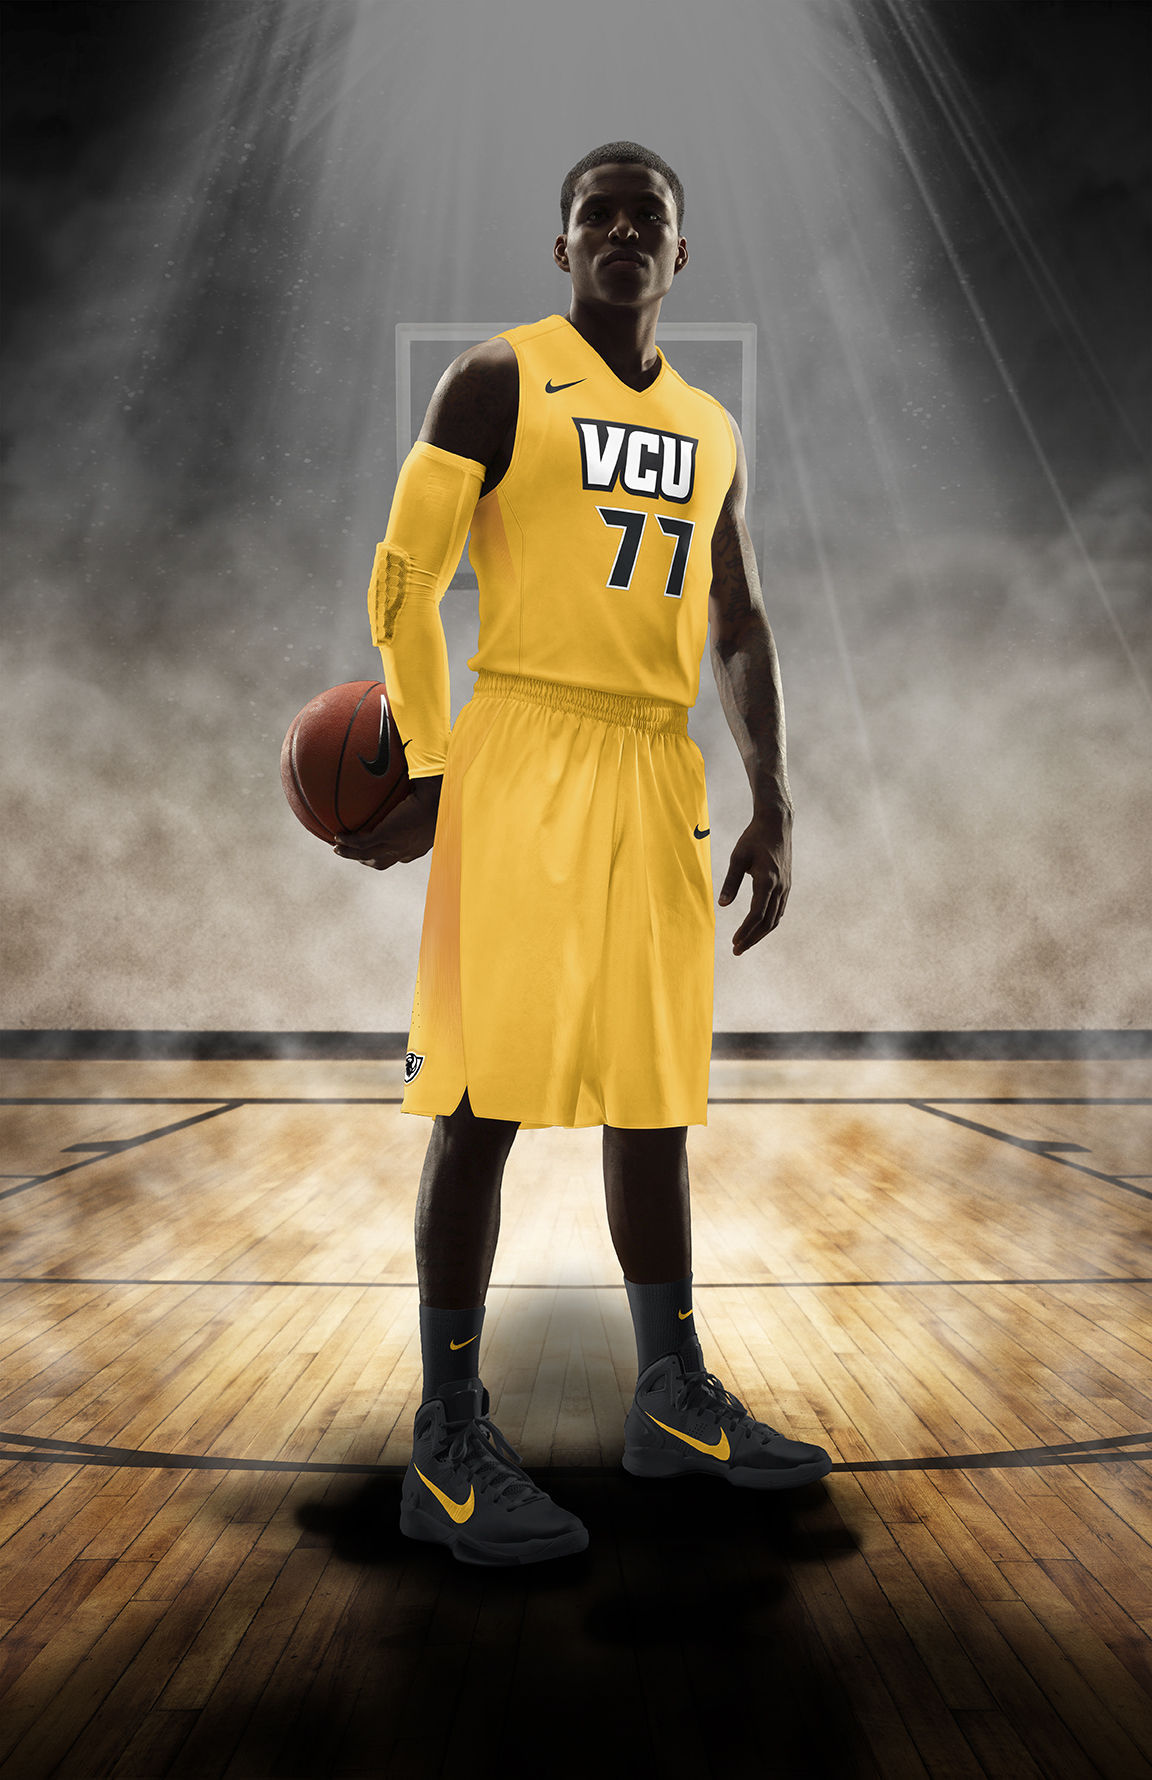 VCU unveils uniforms for upcoming season | College Sports | richmond.com